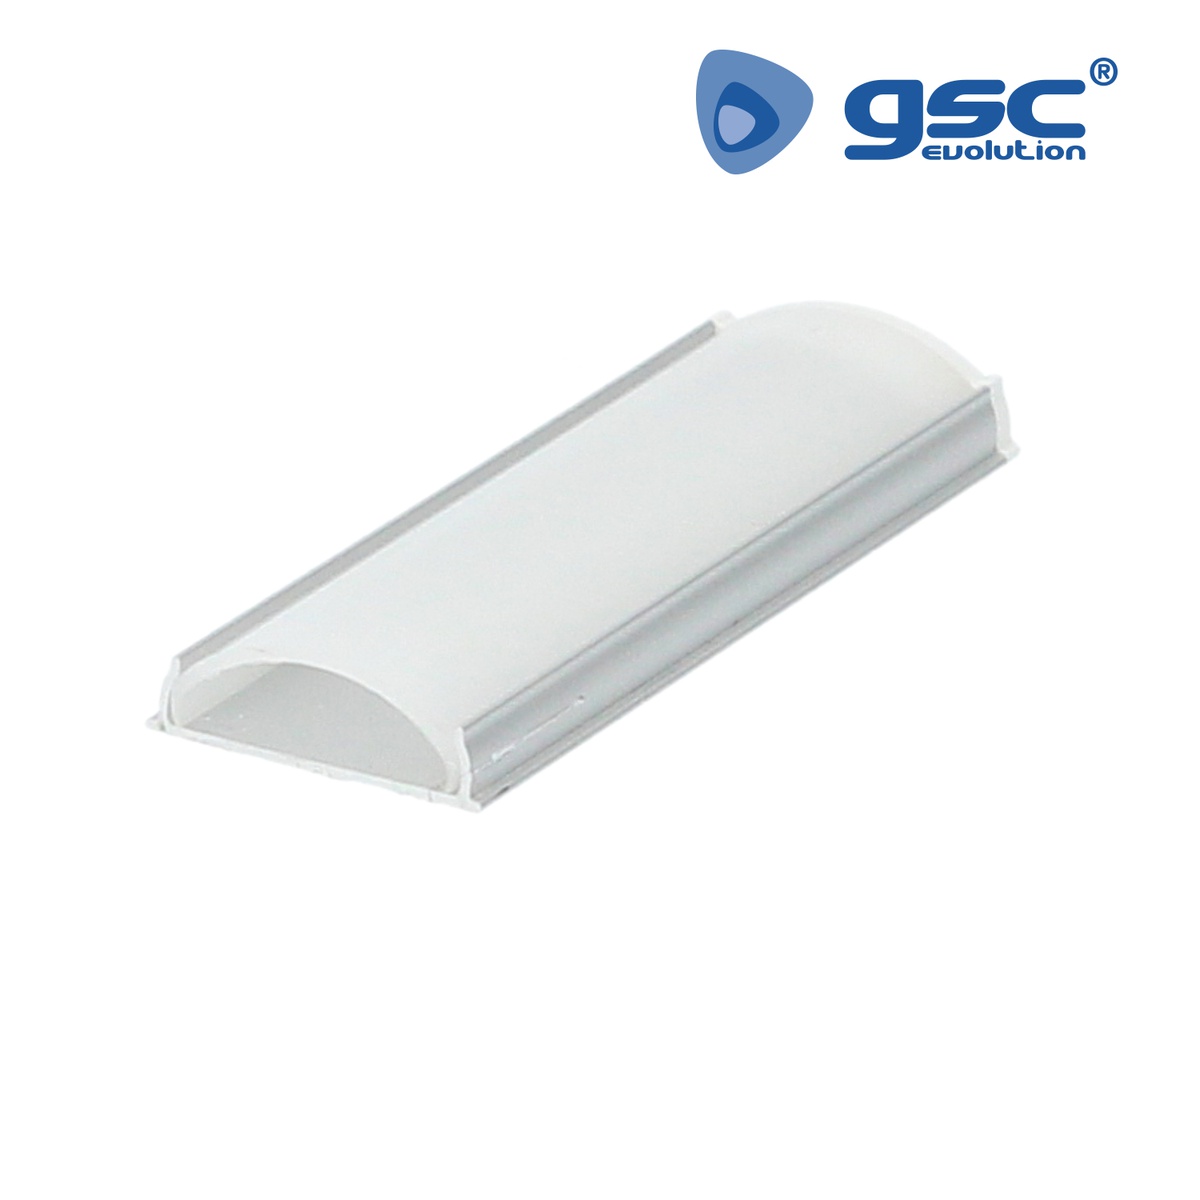 Perfil alumínio translúcido superfície oval 2 m para tiras LED até 14 mm